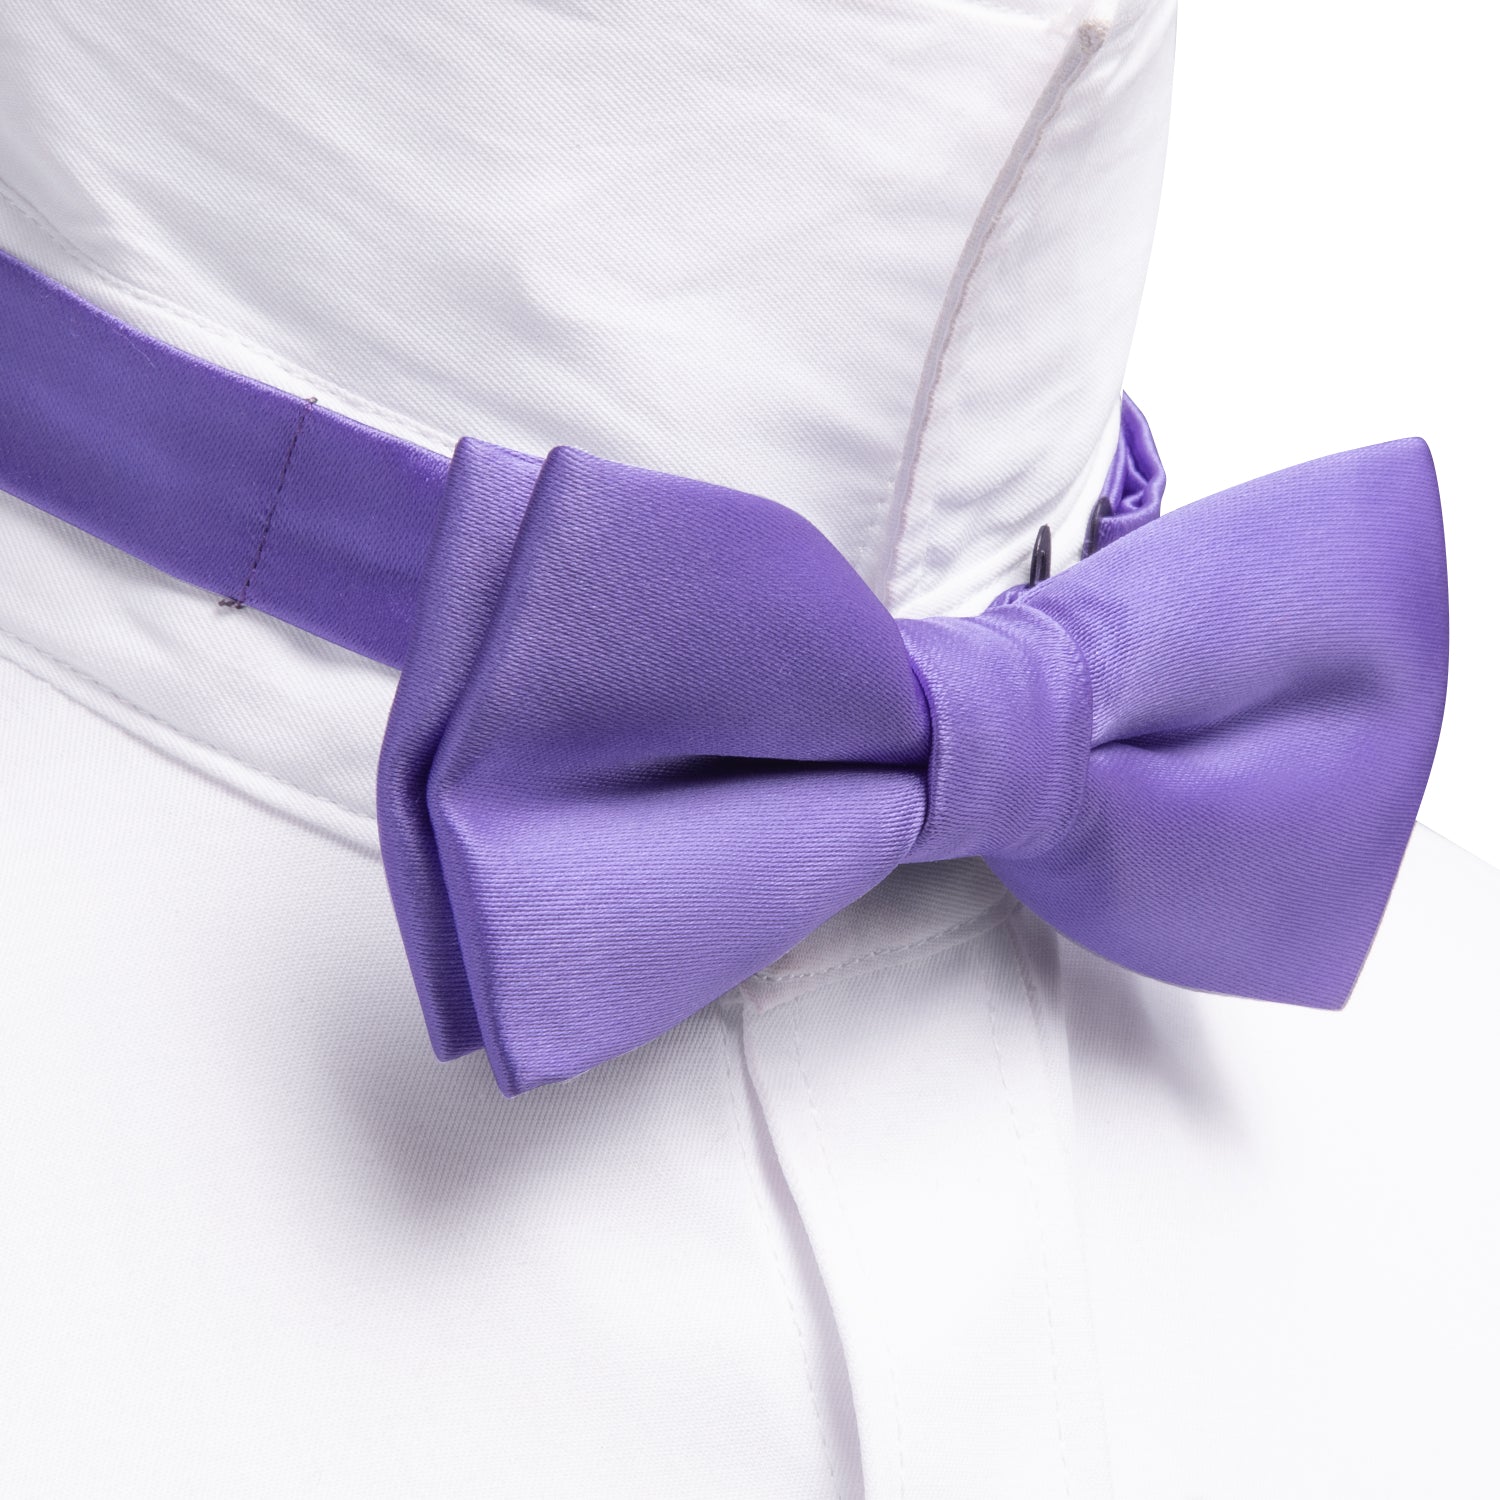 Barry.wang Kids Tie Purple Solid Children's Bow Tie Pocket Square Set